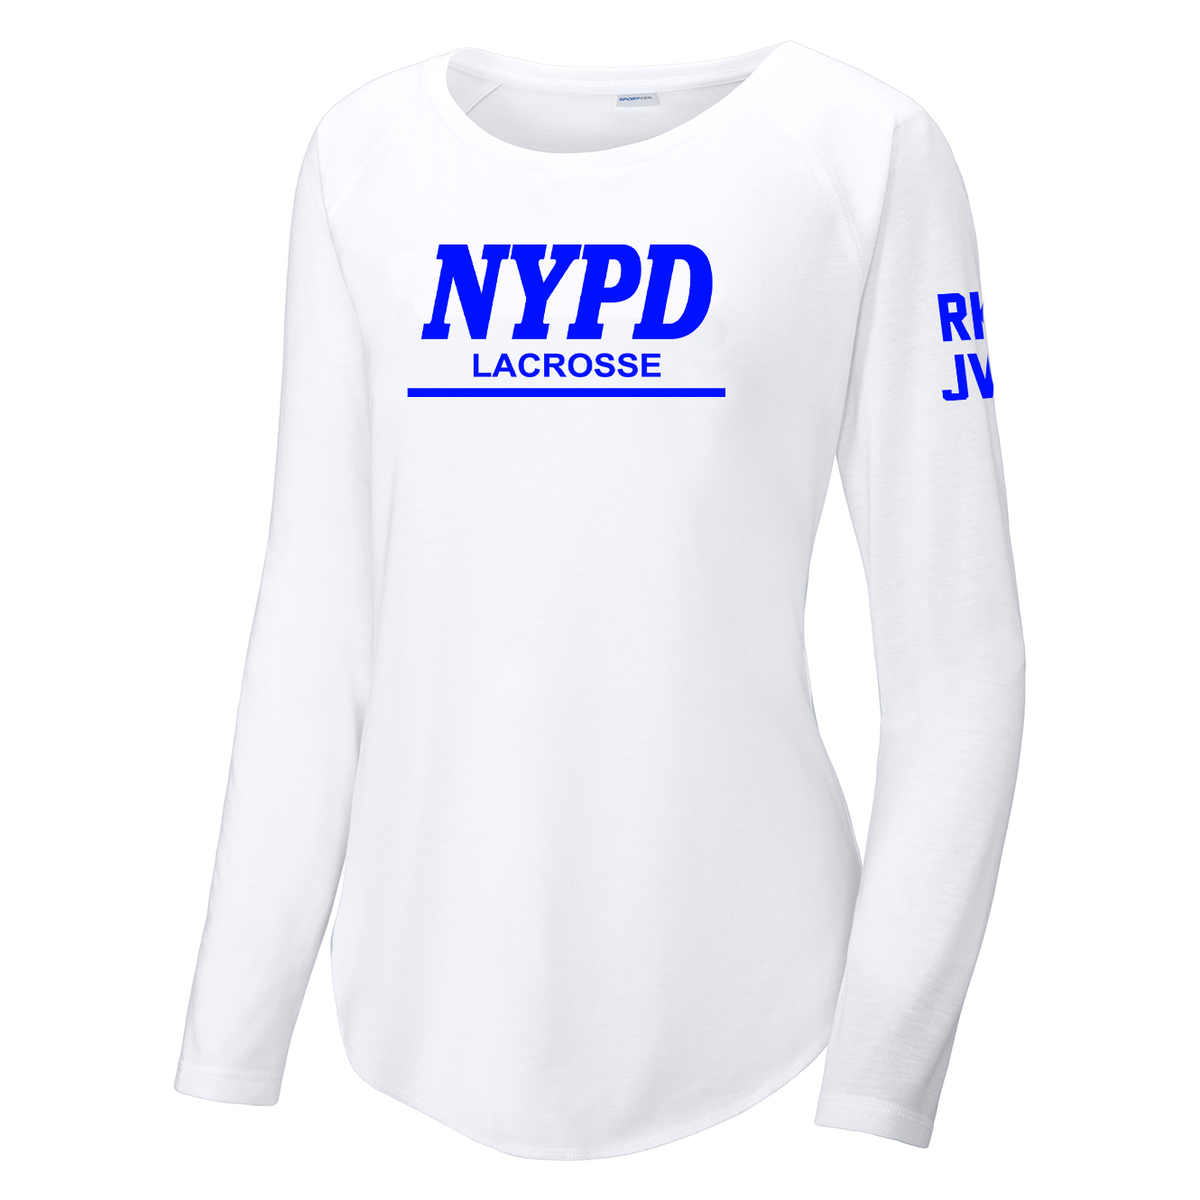 NYPD Lacrosse Women's Raglan Long Sleeve CottonTouch